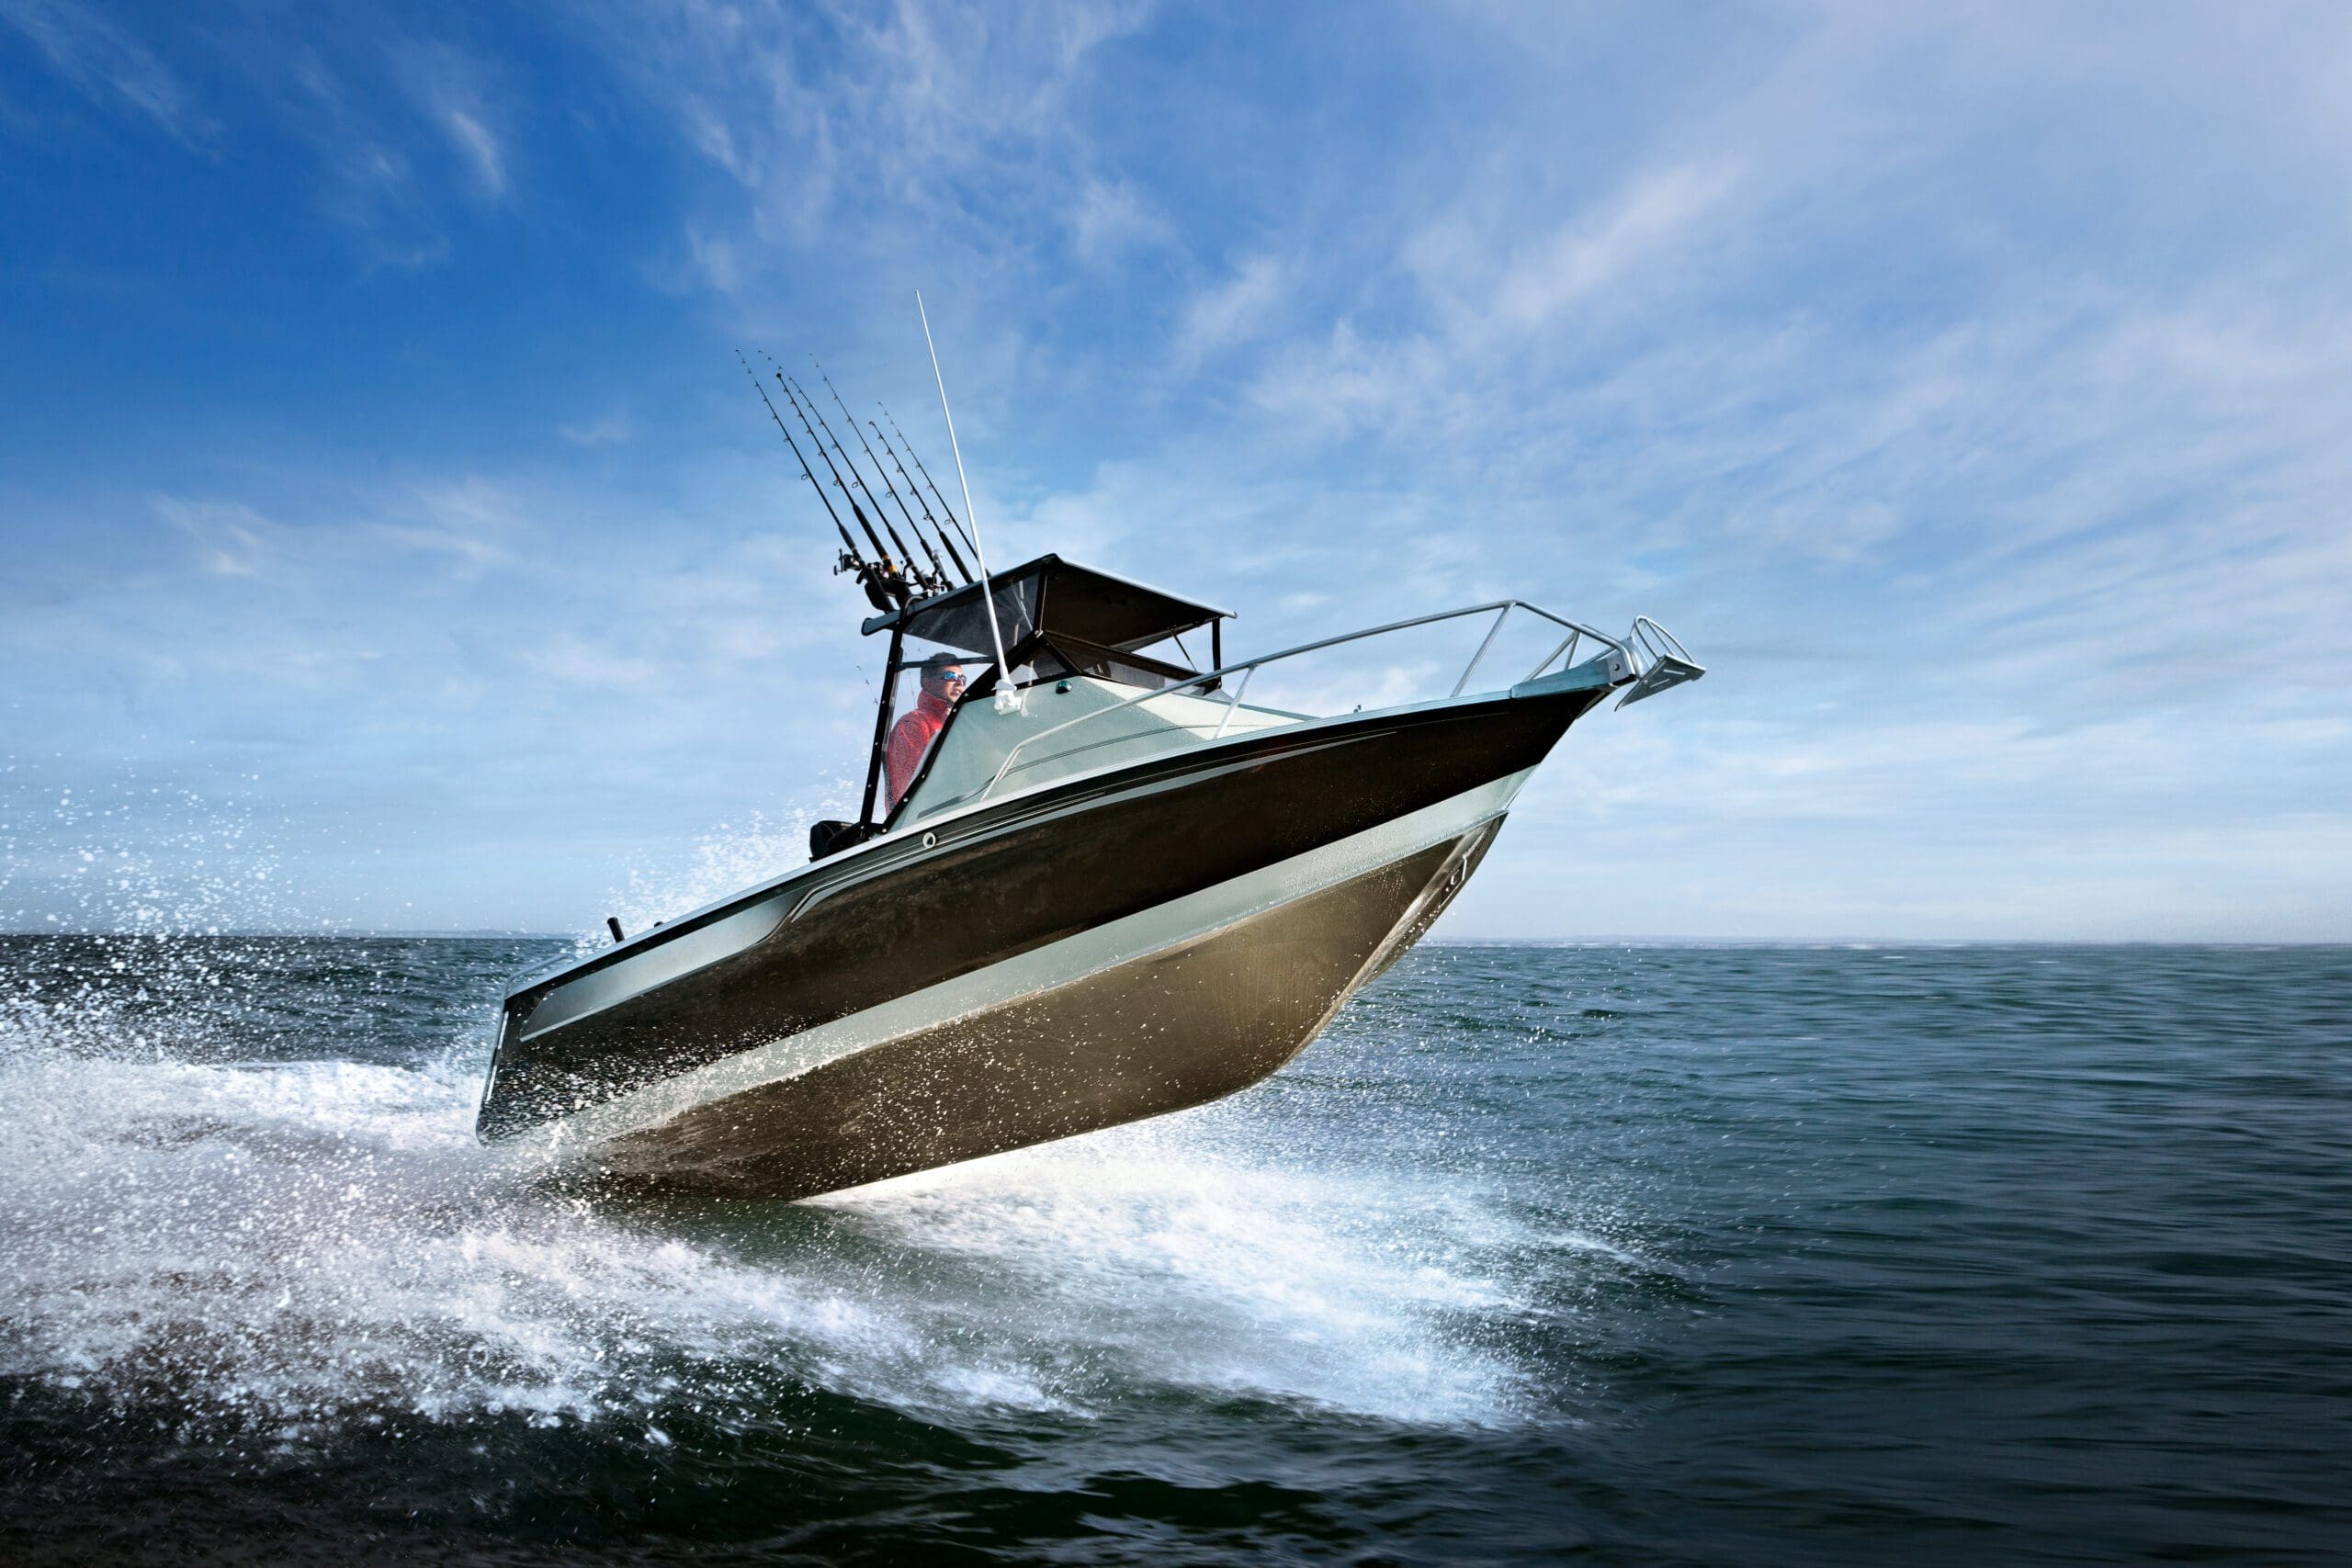 speed-boat-2022-02-08-22-39-24-utc-scaled.jpg